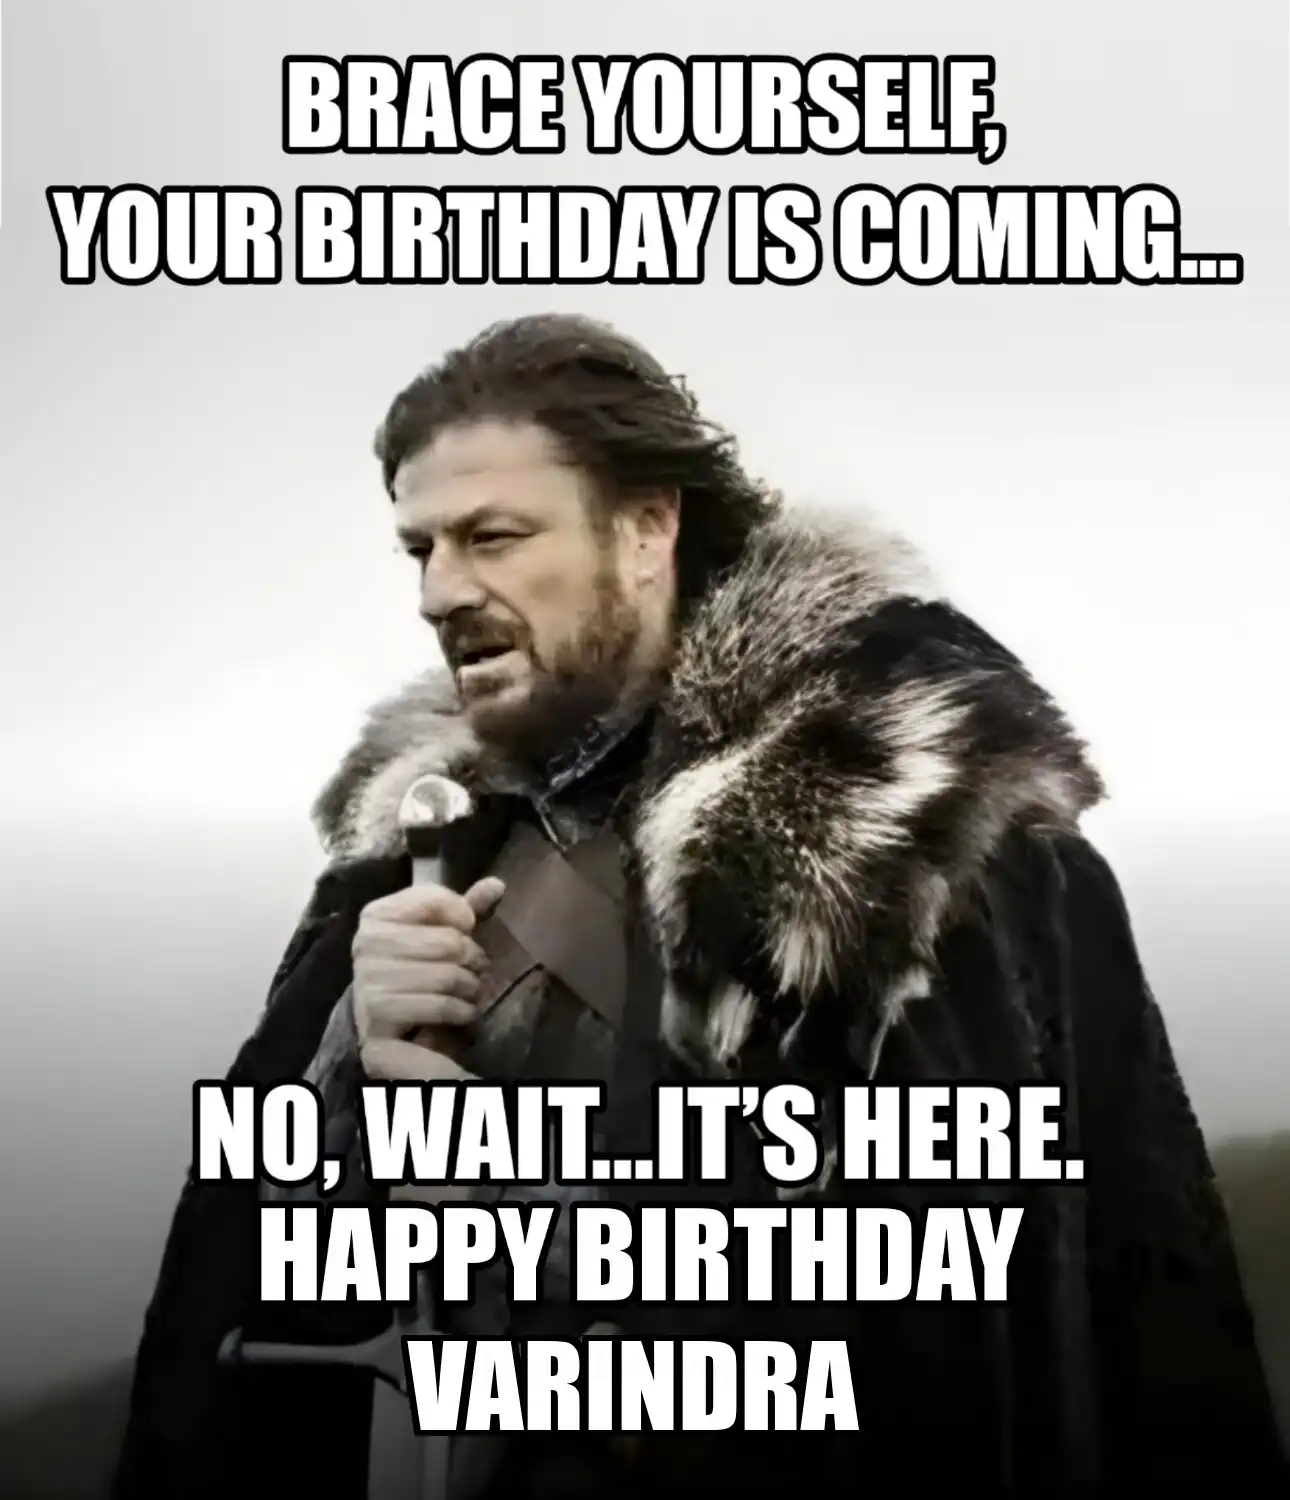 Happy Birthday Varindra Brace Yourself Your Birthday Is Coming Meme